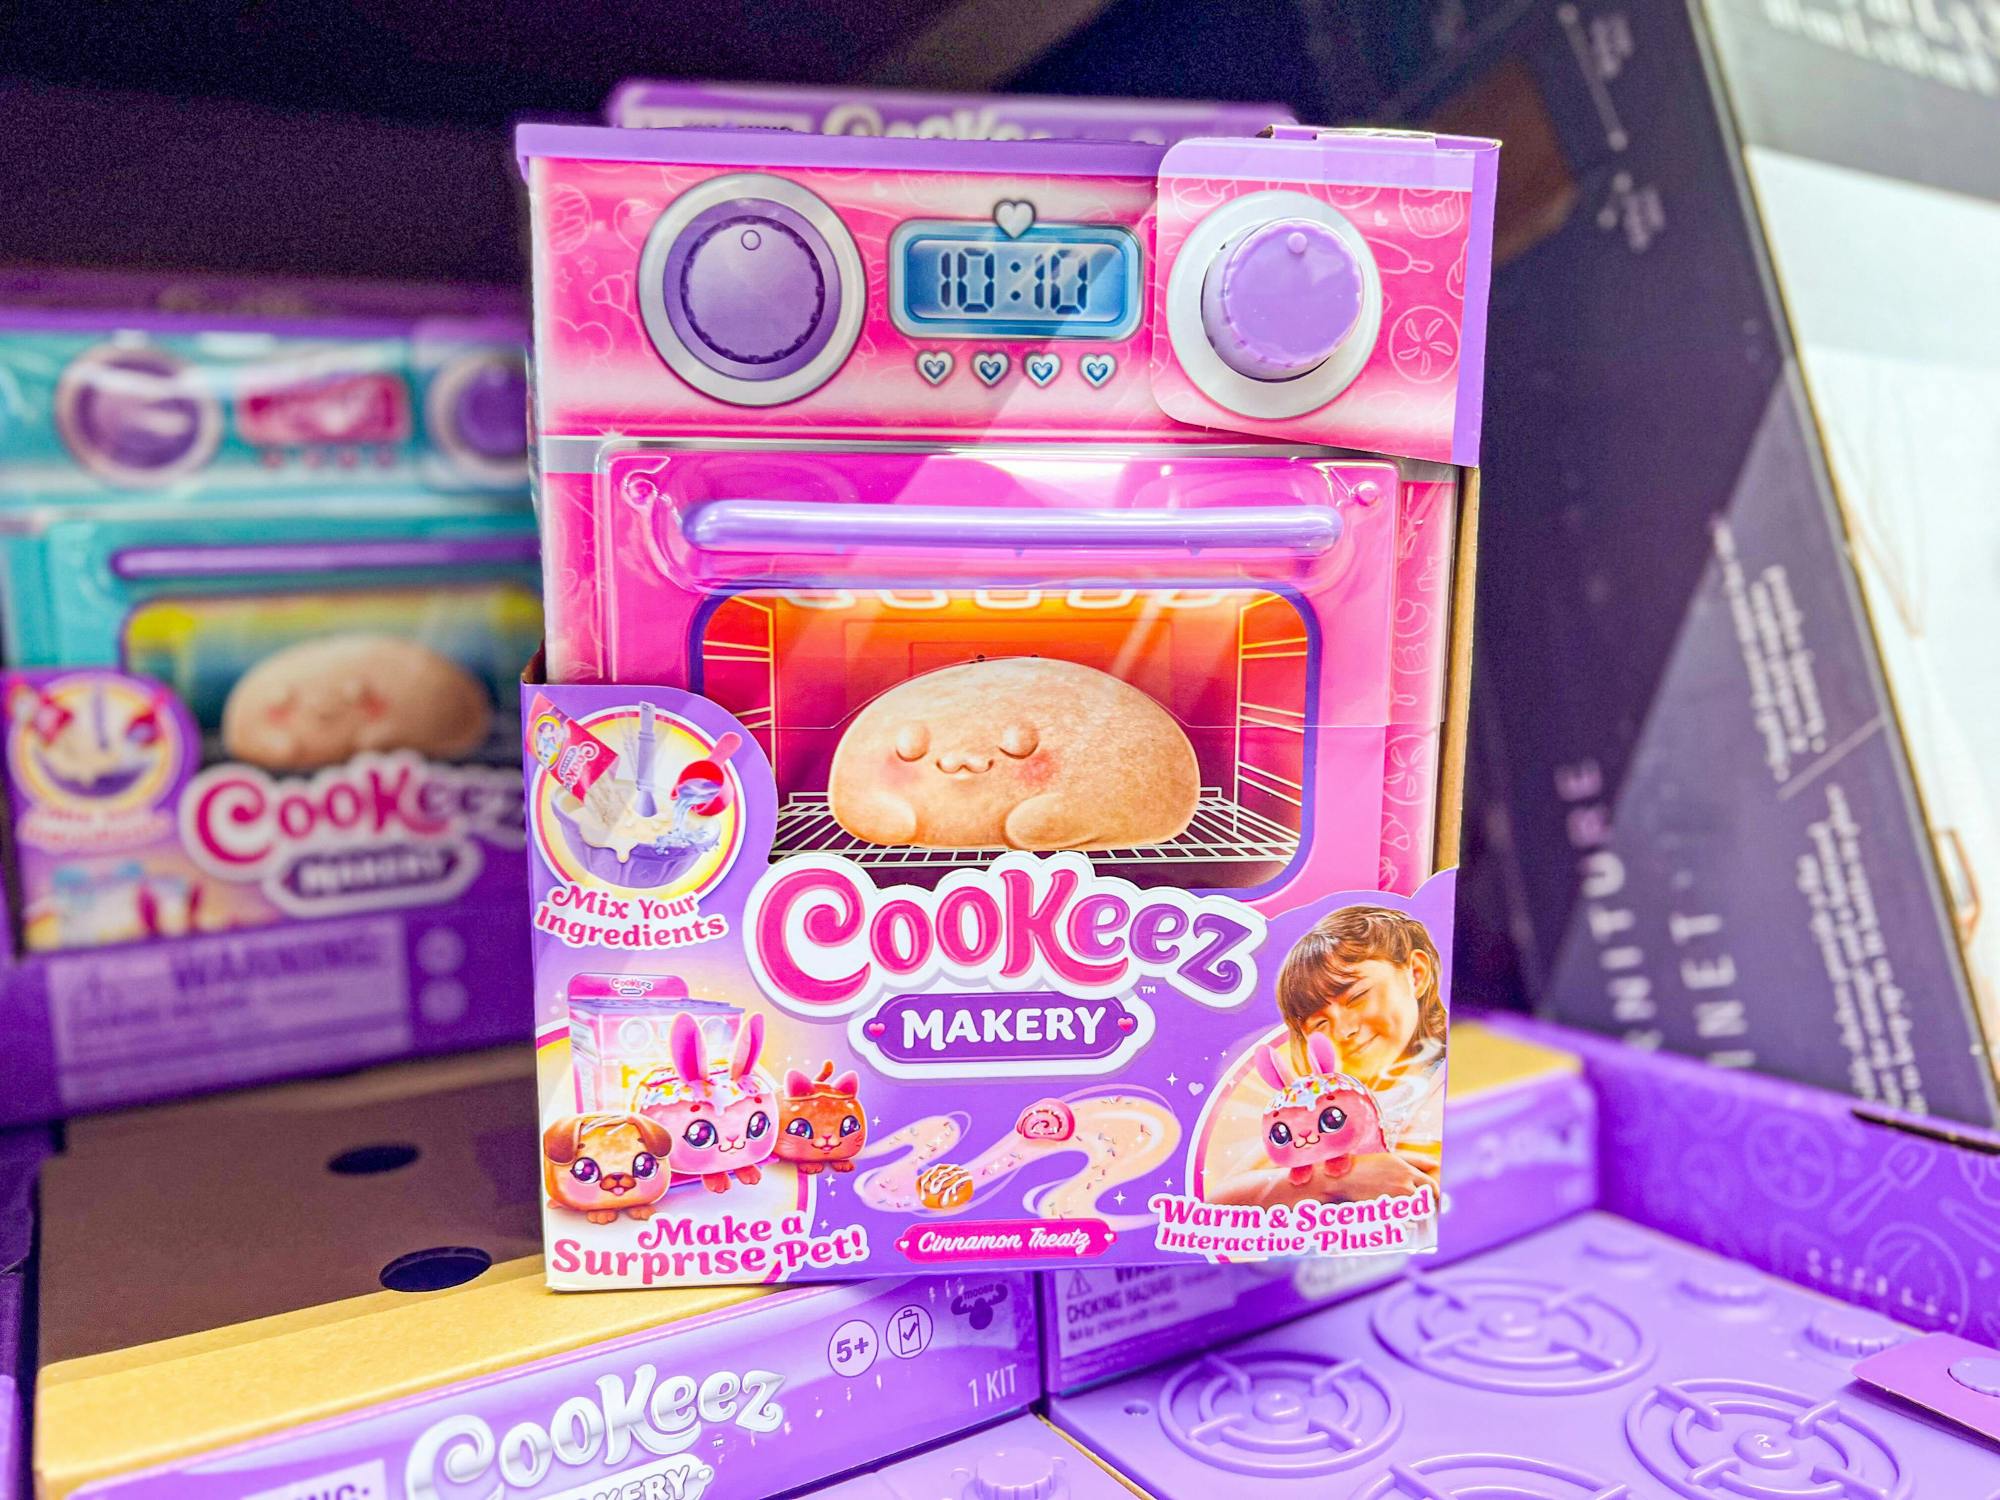 EXCLUSIVE Cookeez Makery Sweet Treatz Oven Playset - Moose Toys